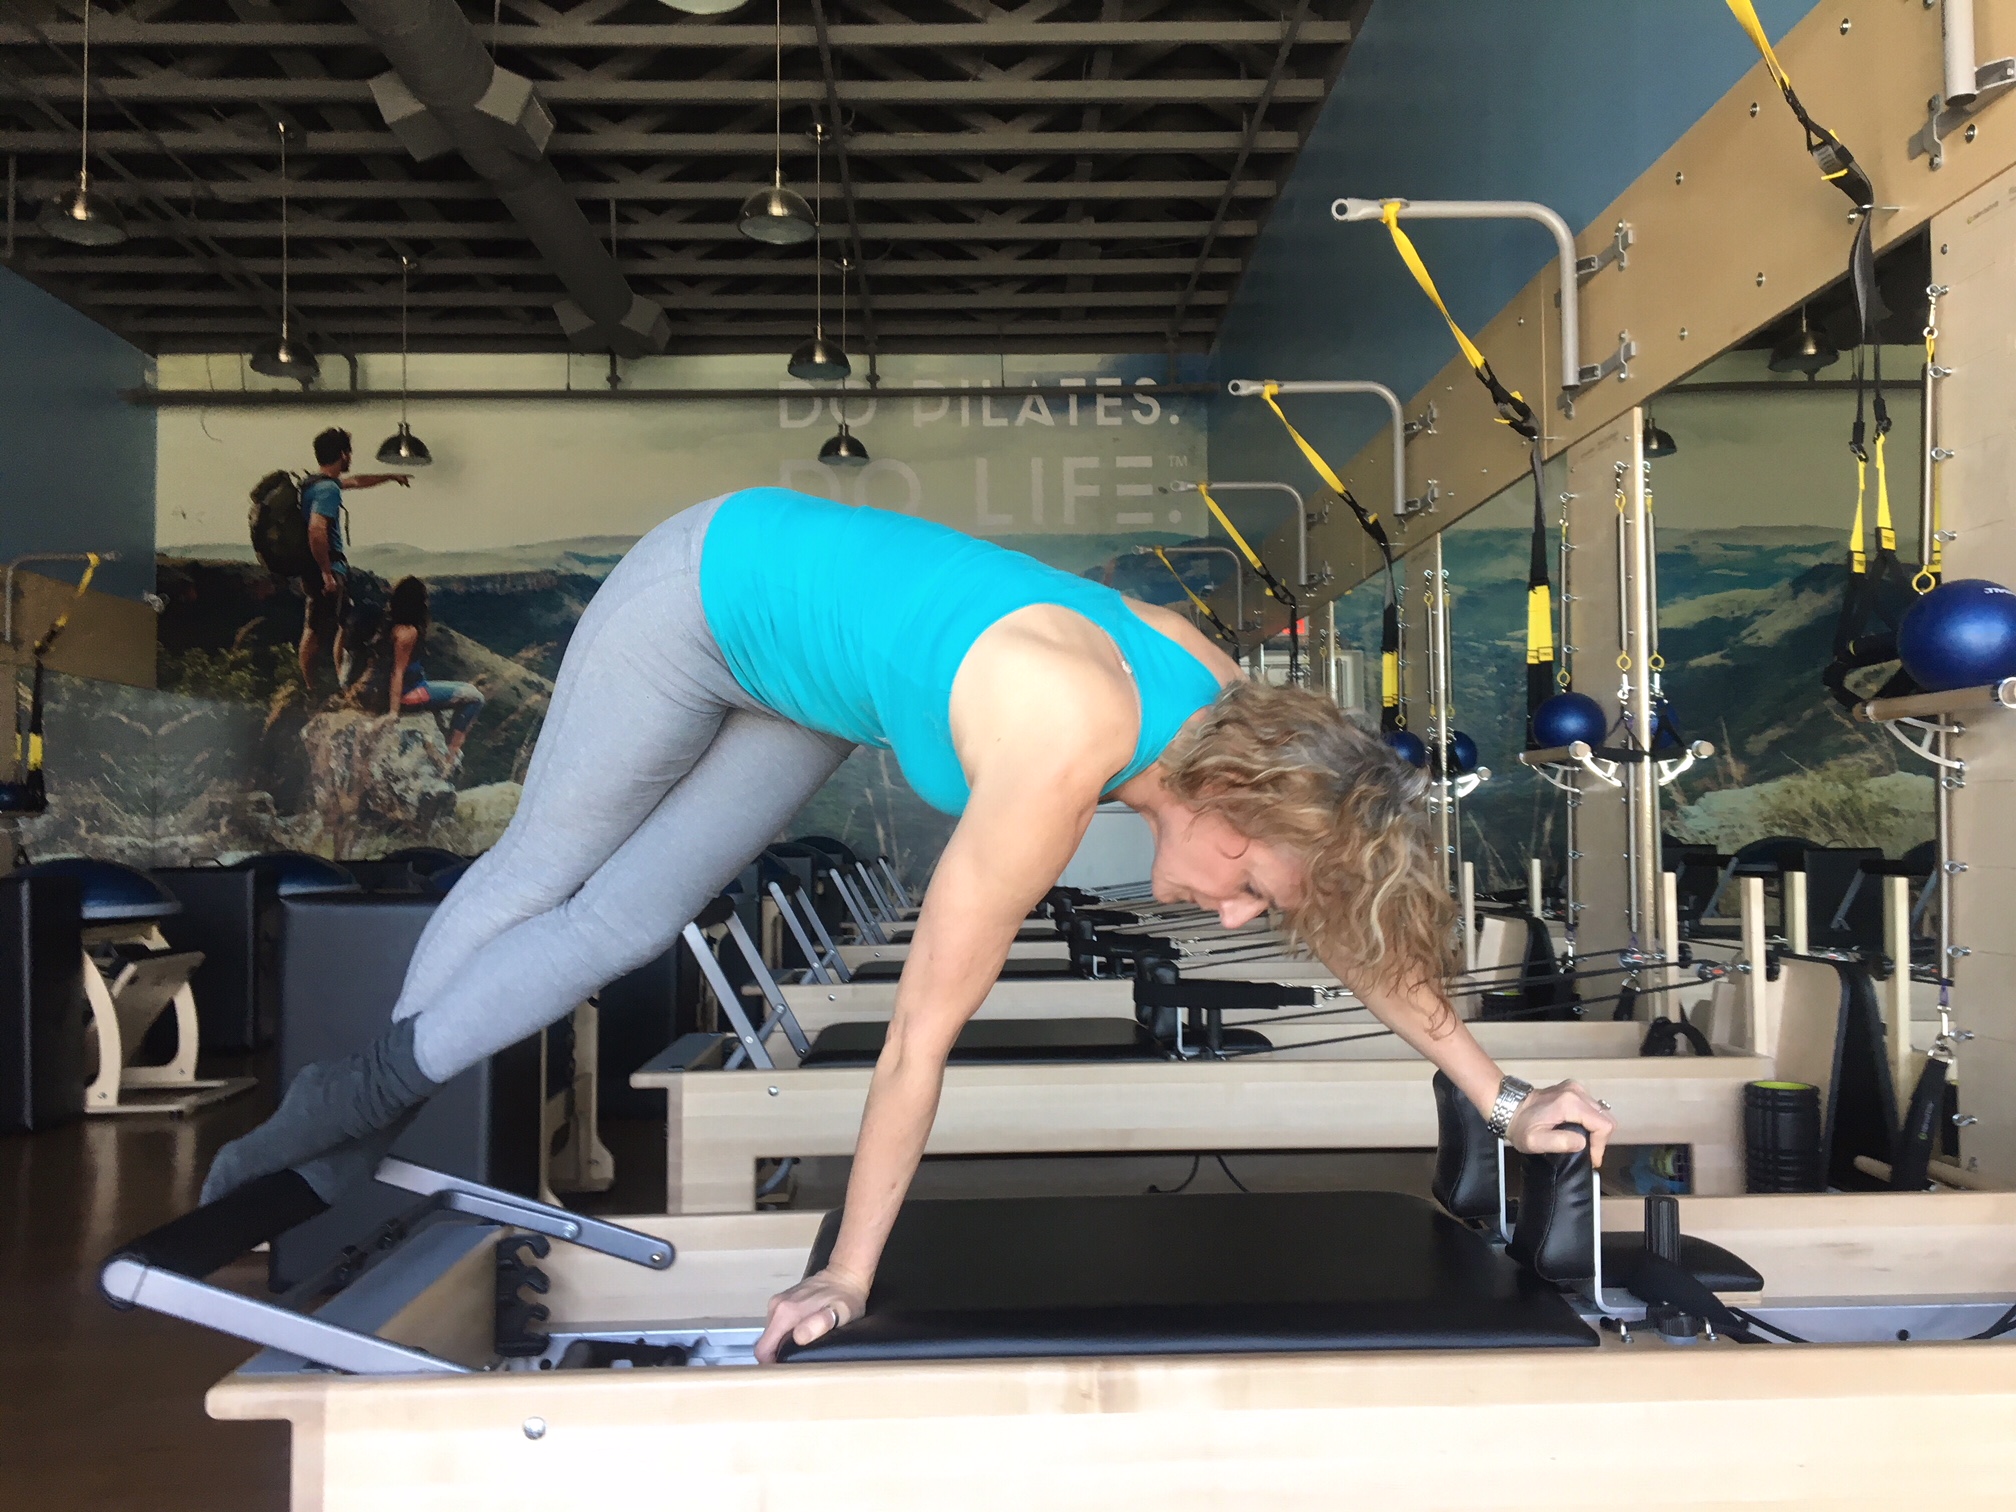 Club Pilates - Springboard squats with @kristin.oneil!